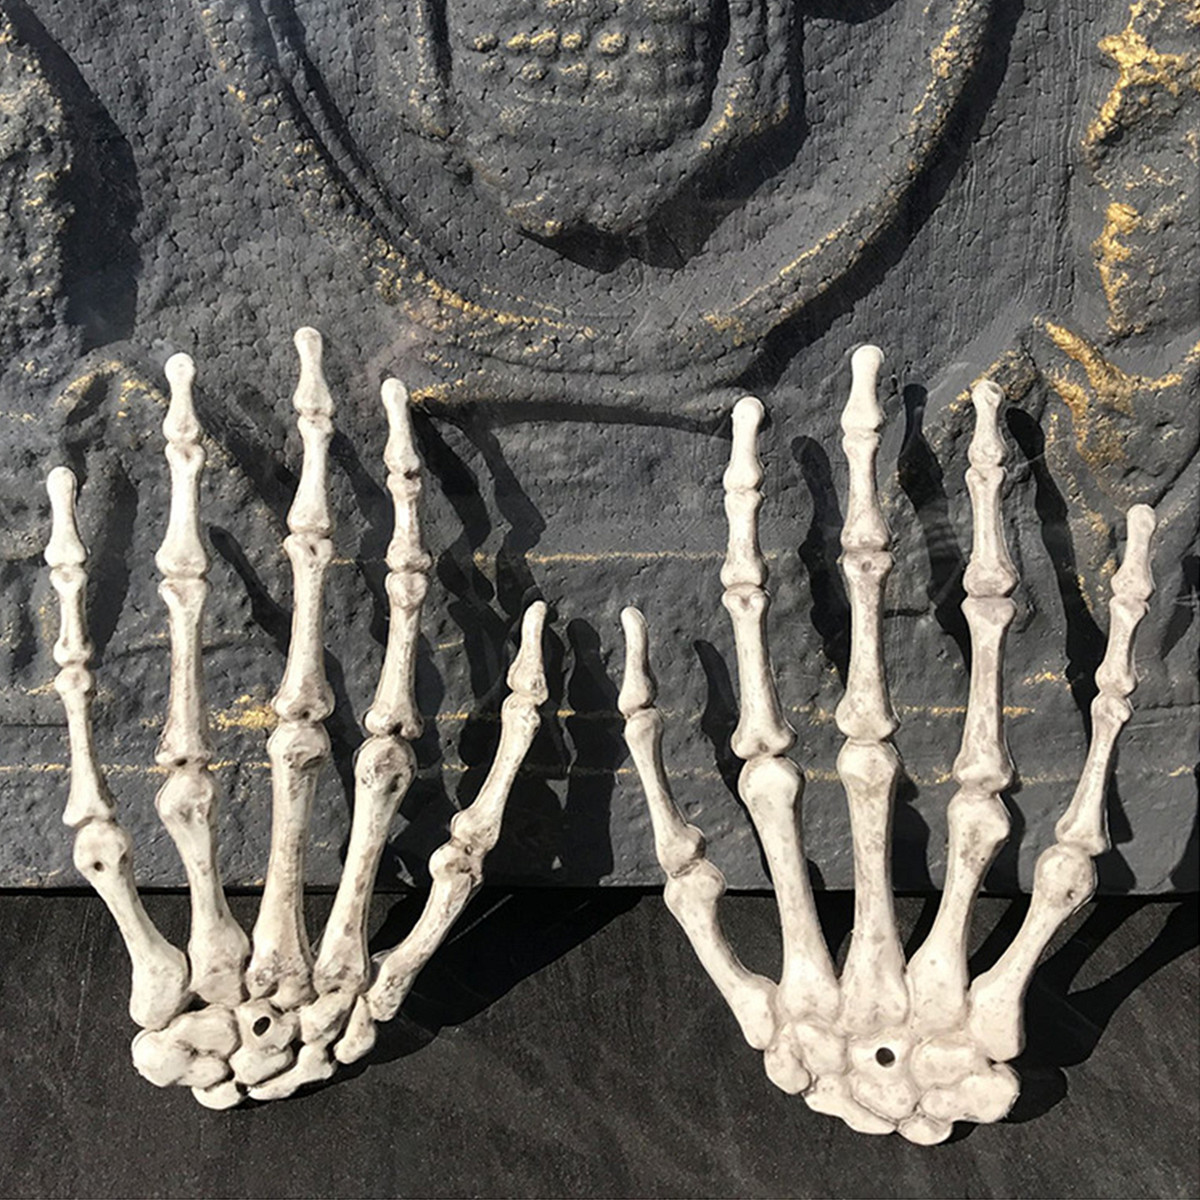 

Skeleton Skull Claw Hand Bone Mischievous Halloween Carnival Accessory Decorations